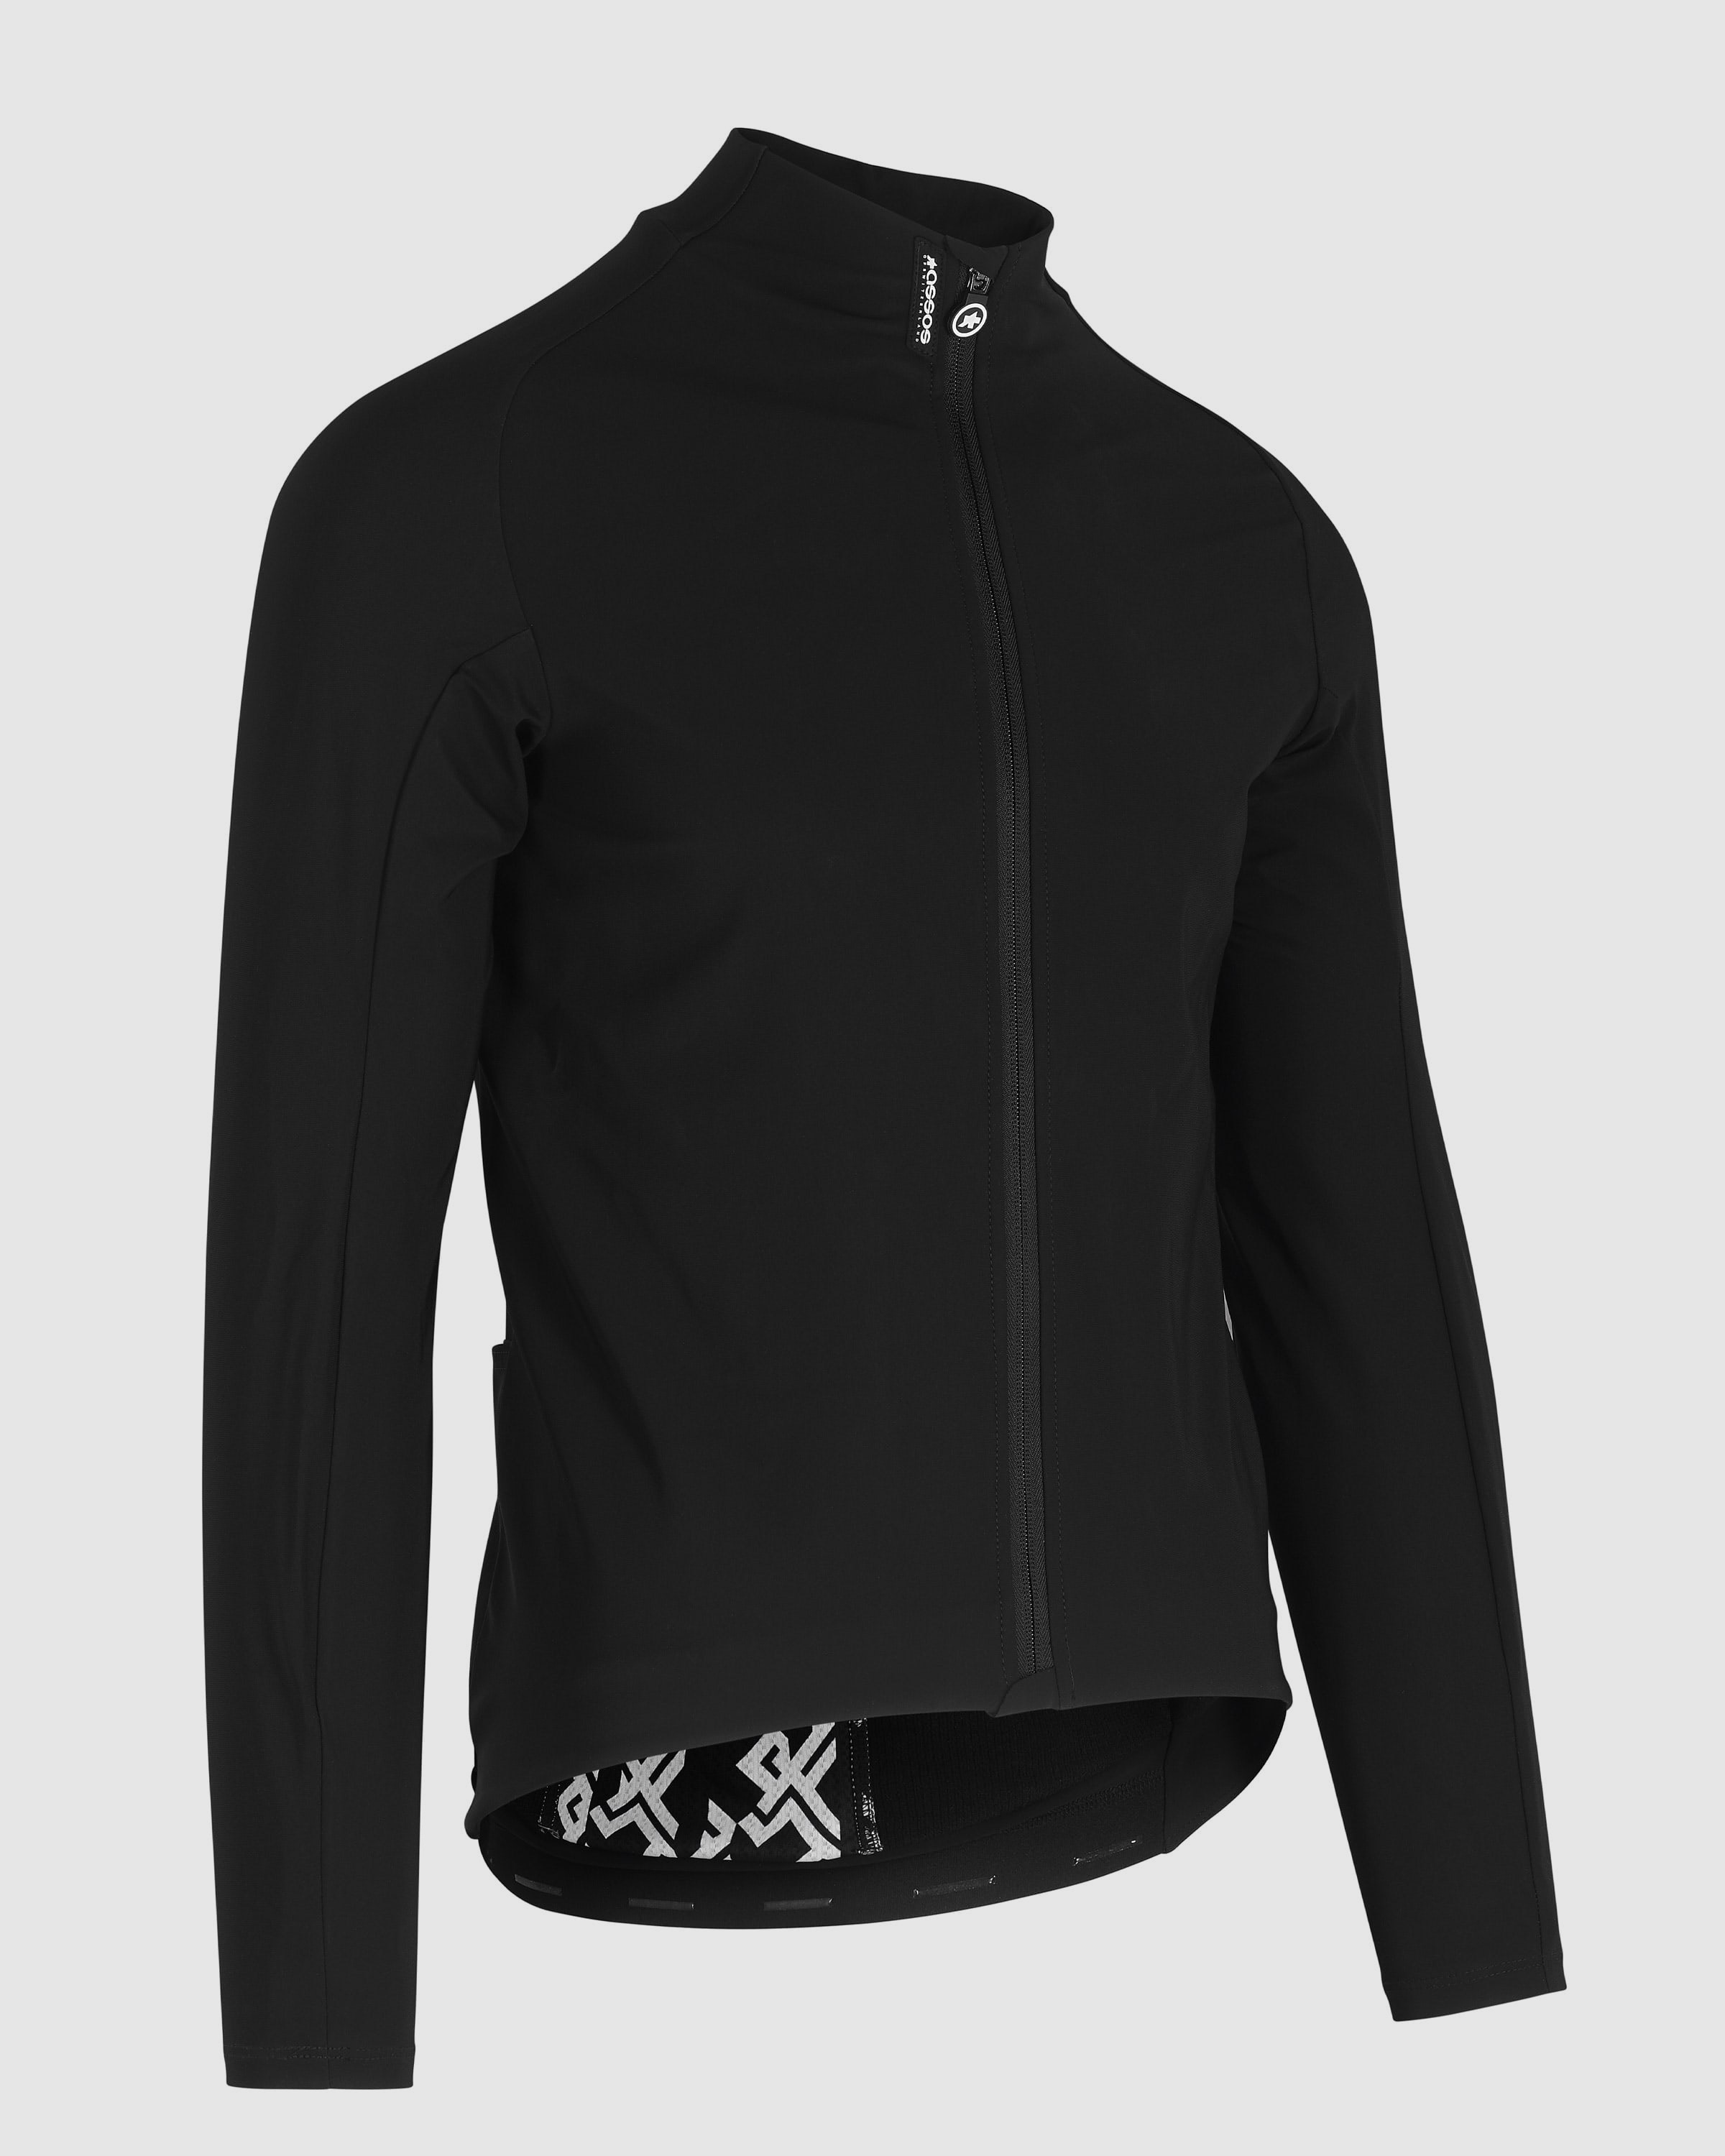 MILLE GT Ultraz Winter Jacket EVO, blackSeries » ASSOS Of Switzerland